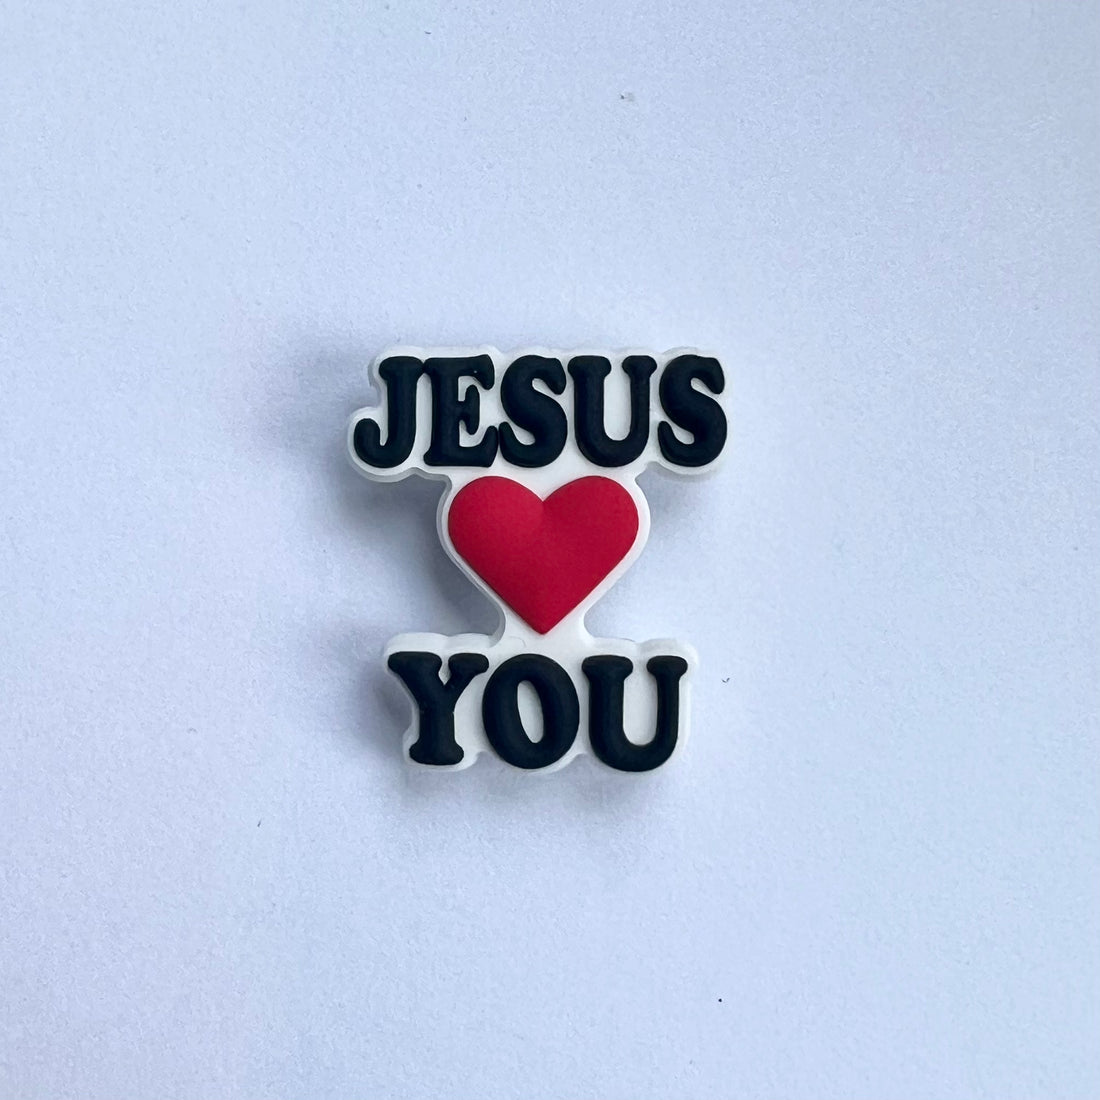 Jesus Loves You Charm